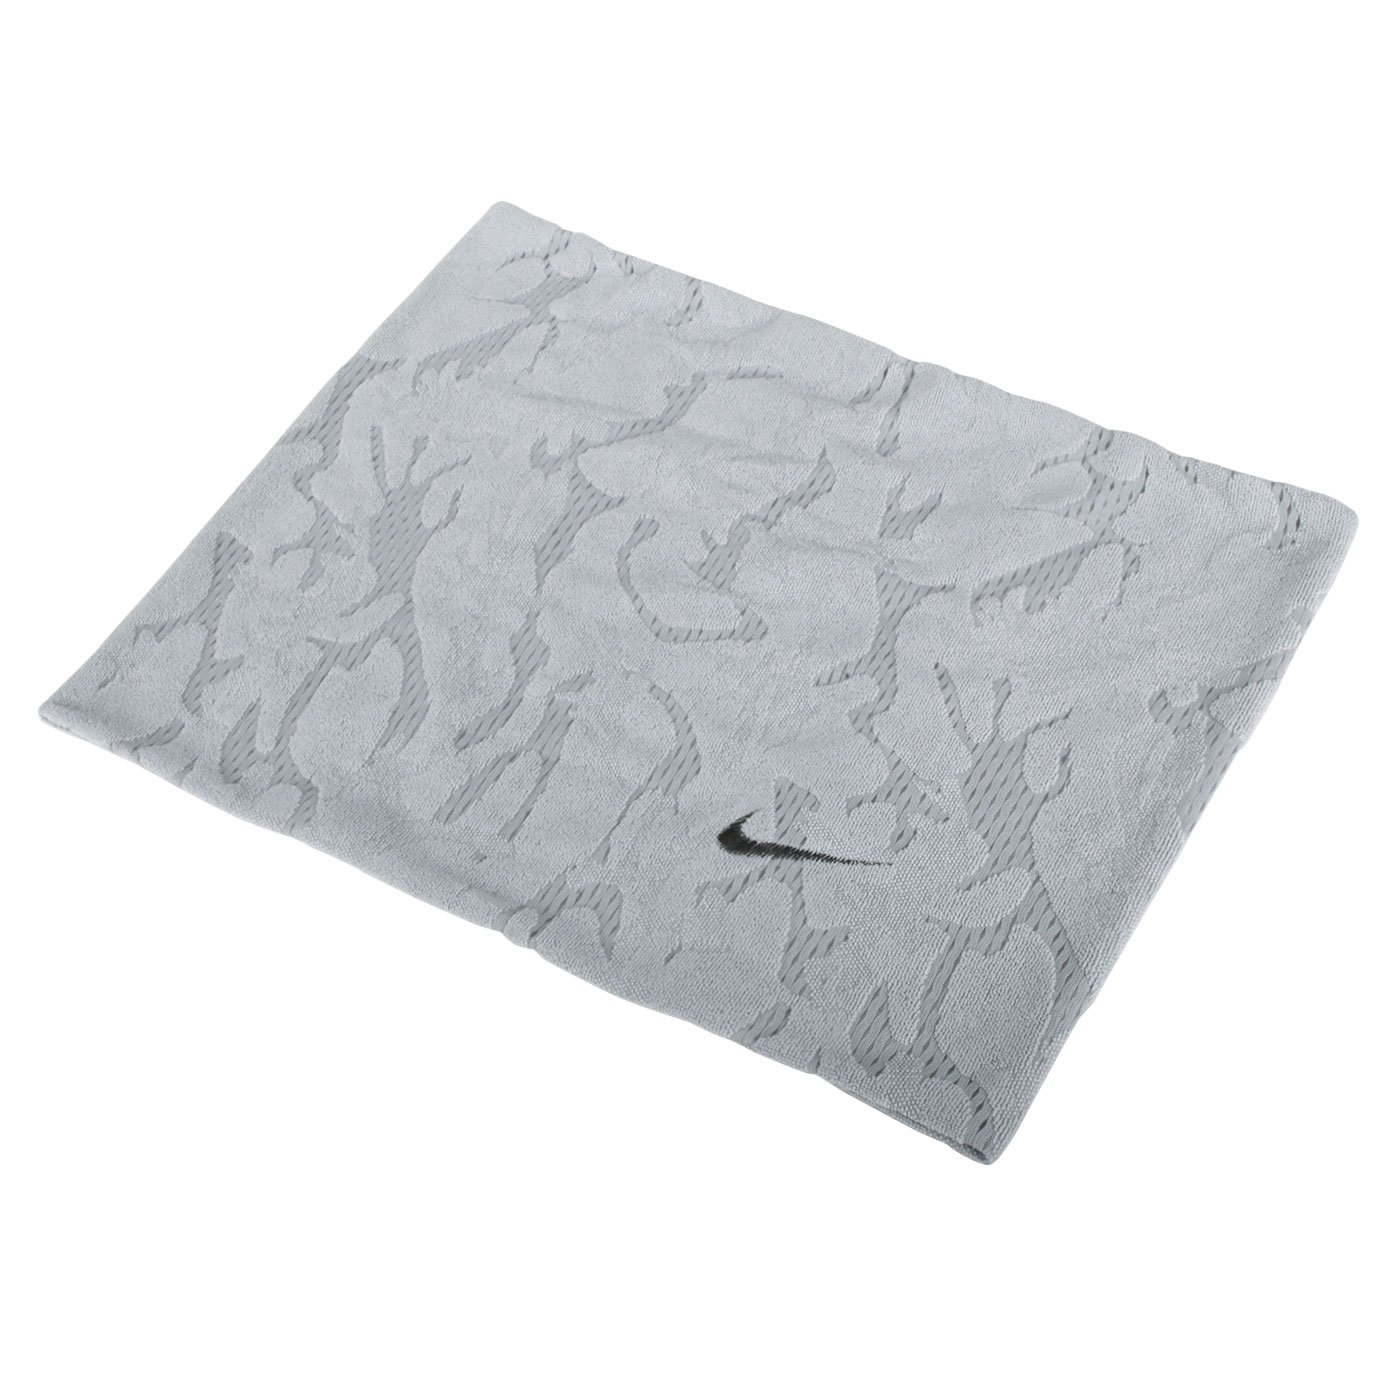 NIKE COOLING LOOP毛巾 N1001619074OS - 灰白